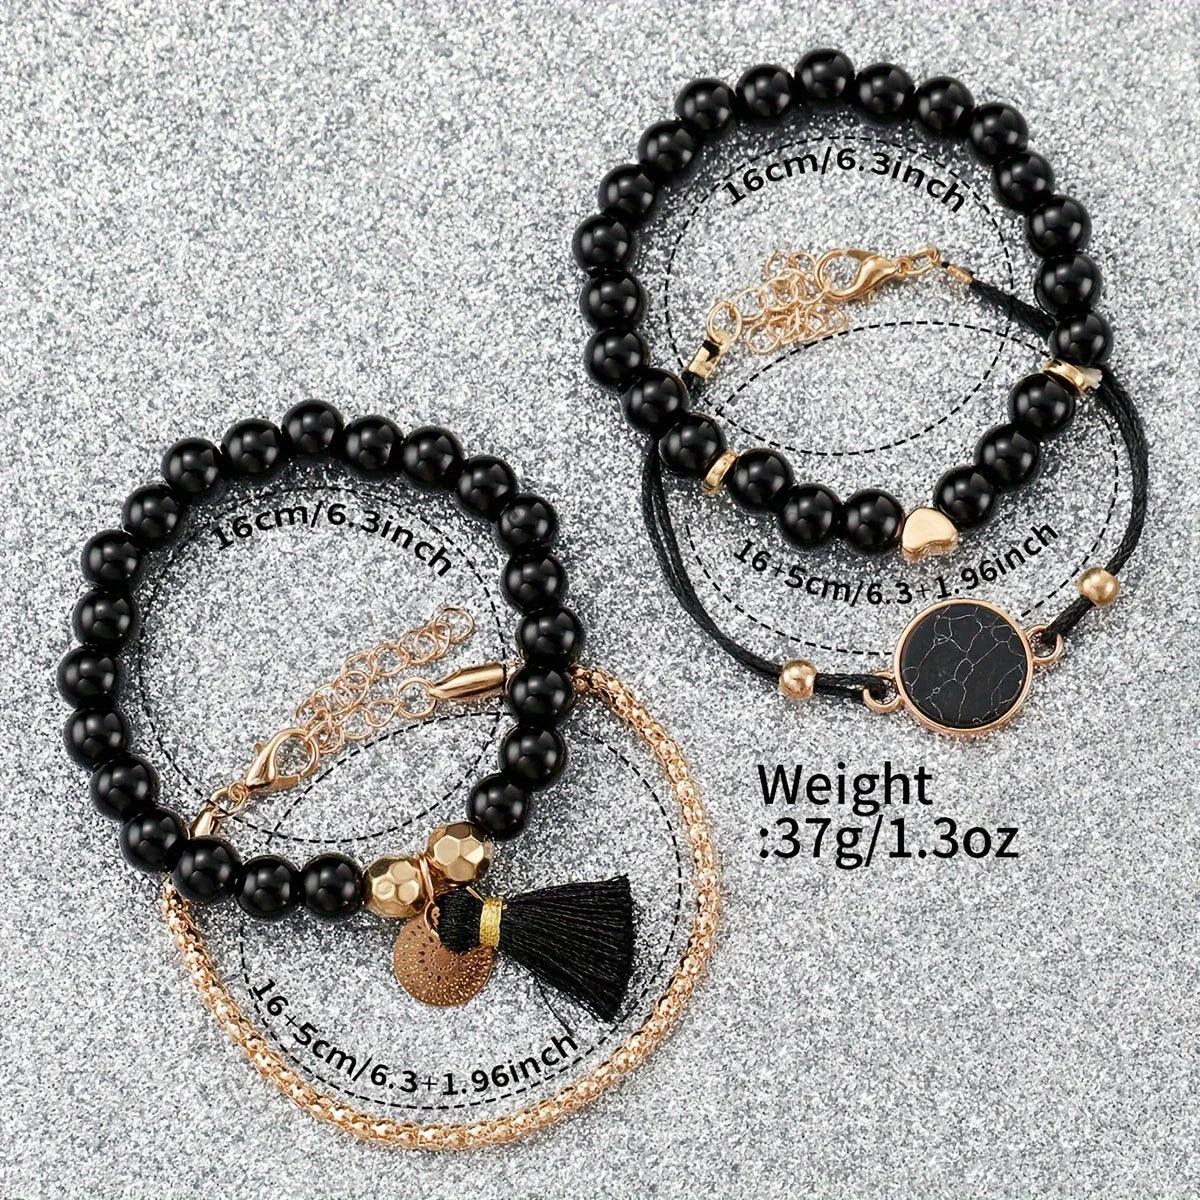 RUNERR Caxo Lena Watch & Jewelry Set Gift - RUBASO